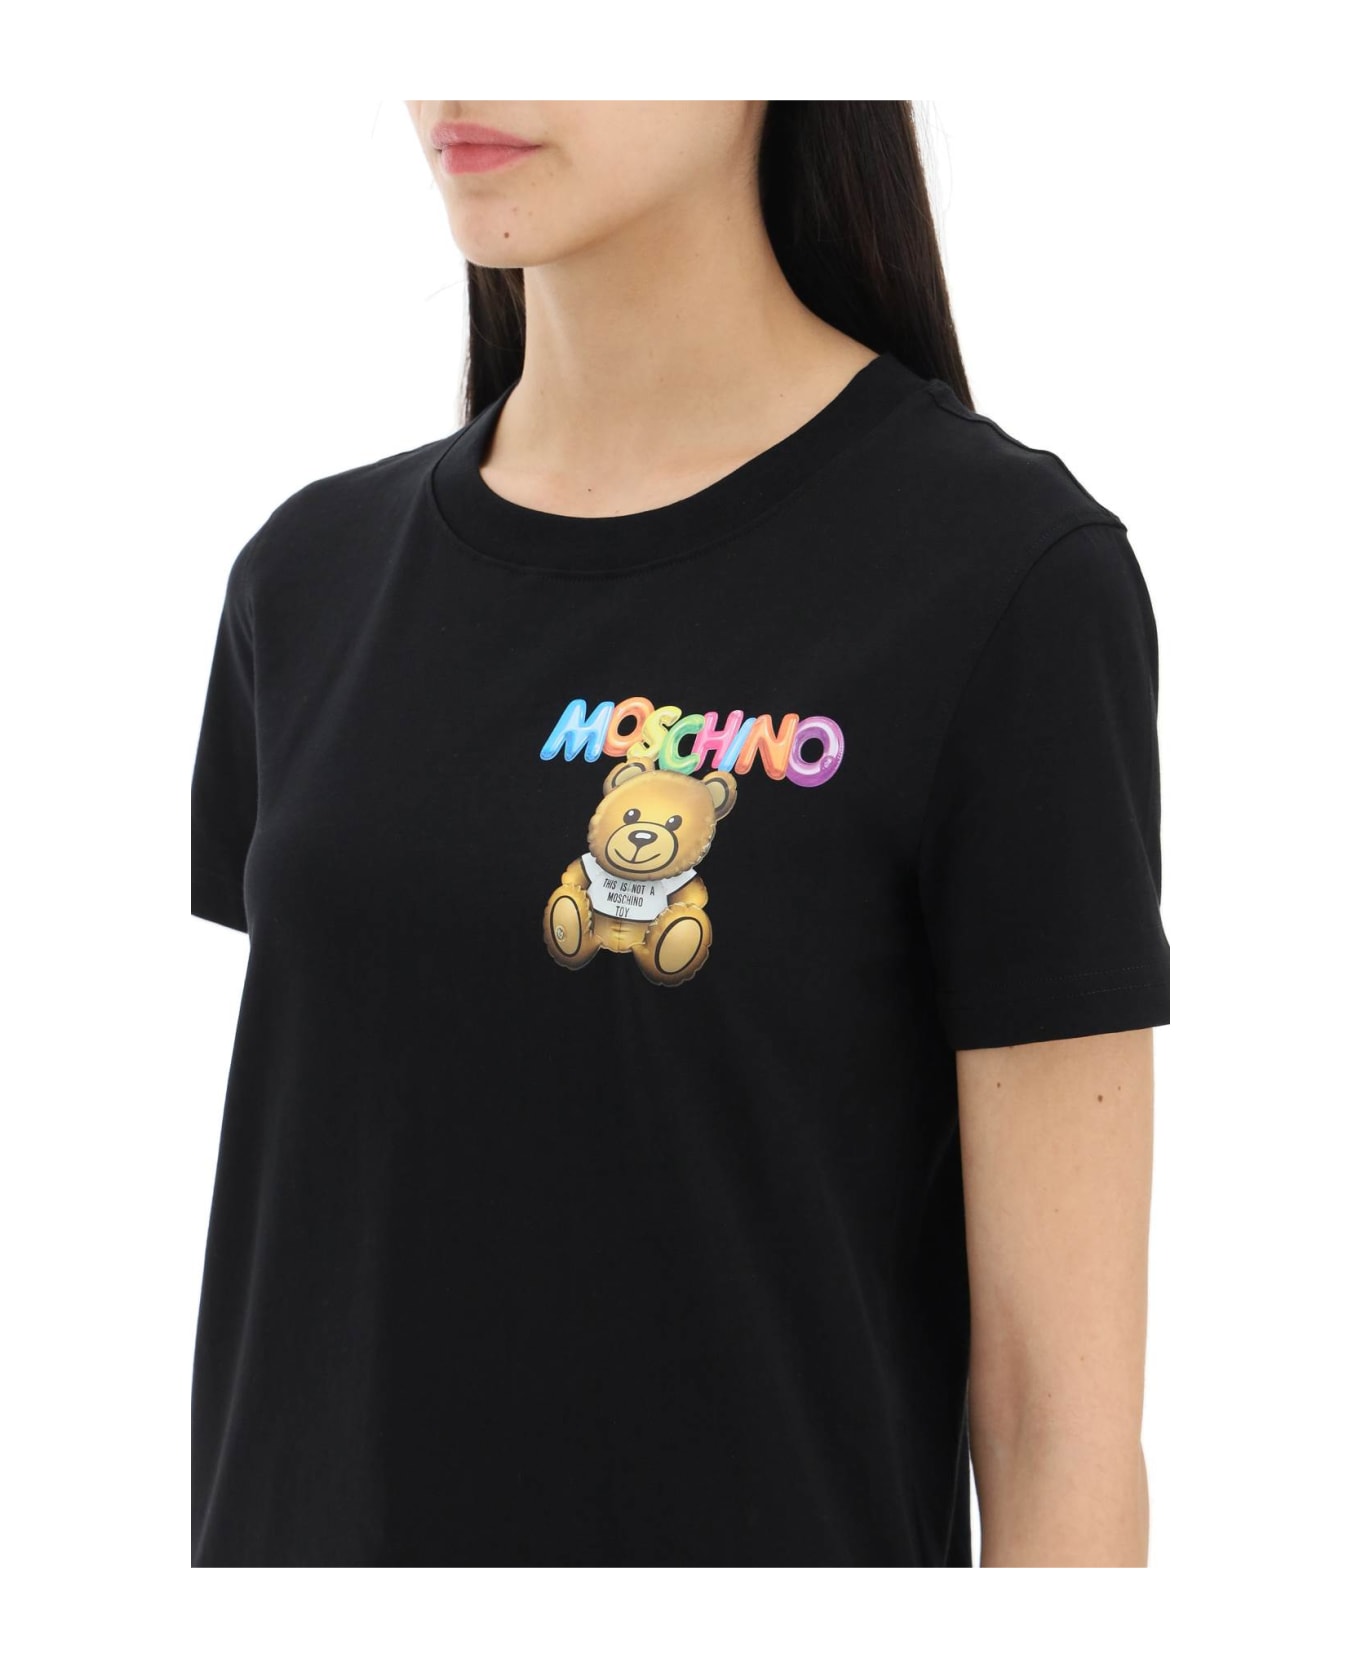 Moschino Teddy Bear Logo T-shirt - FANTASIA NERO (Black)